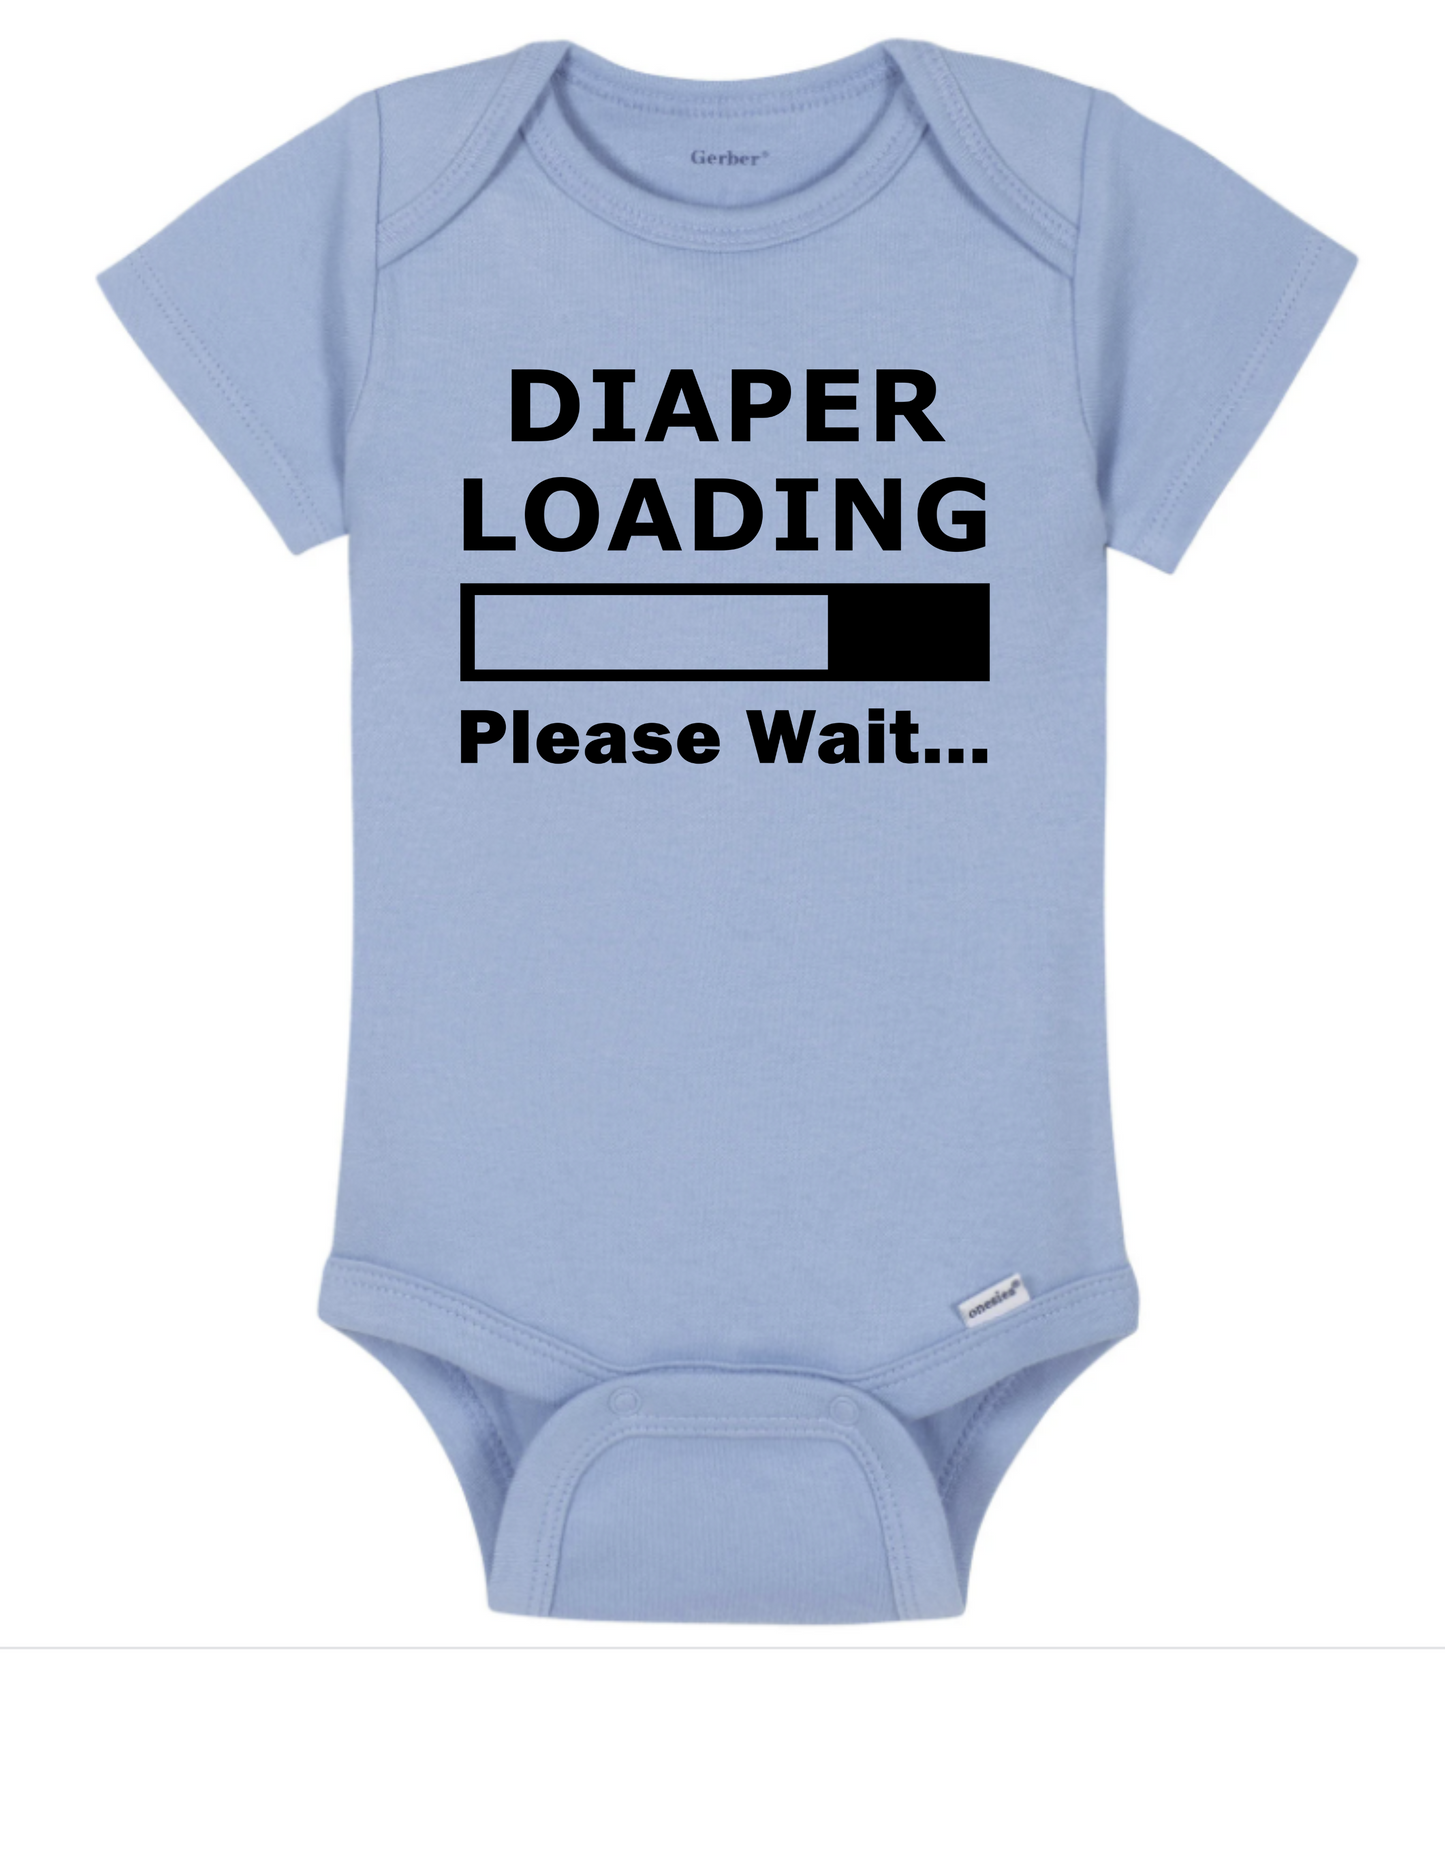 Diaper Loading, Please Wait - Onesie White, Pink, or Blue - Mister Snarky's